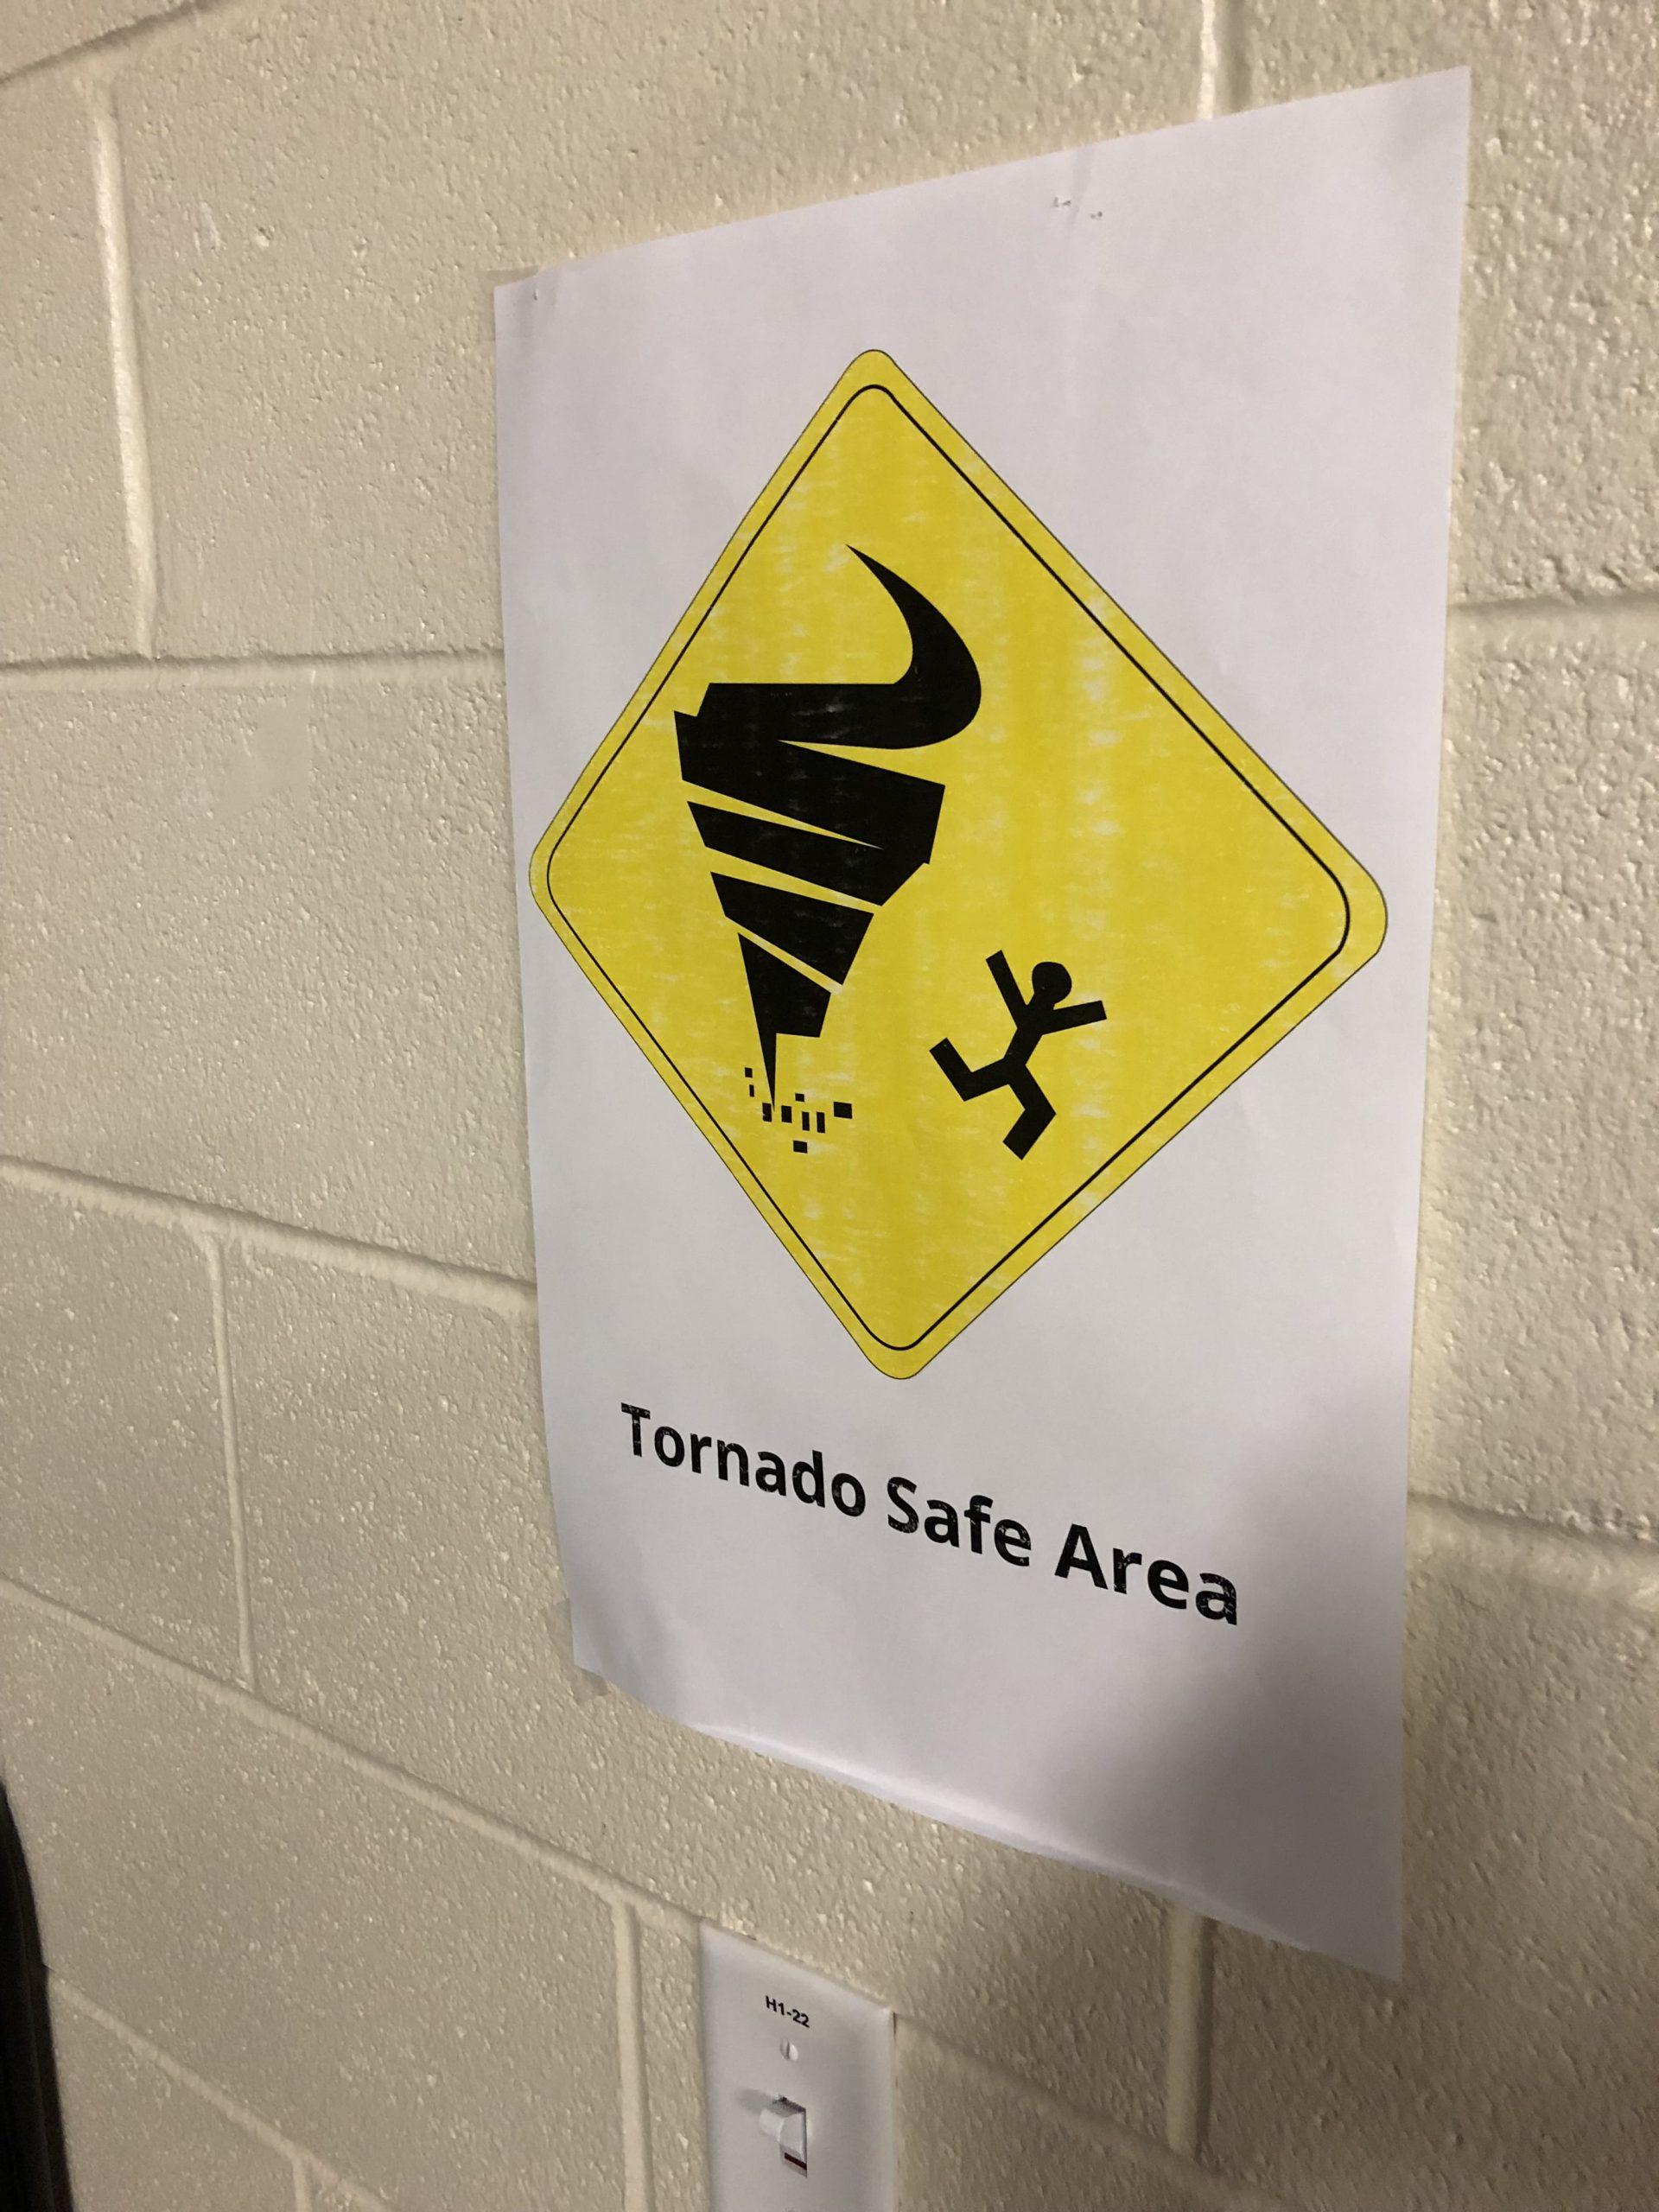 tornado watch symbol